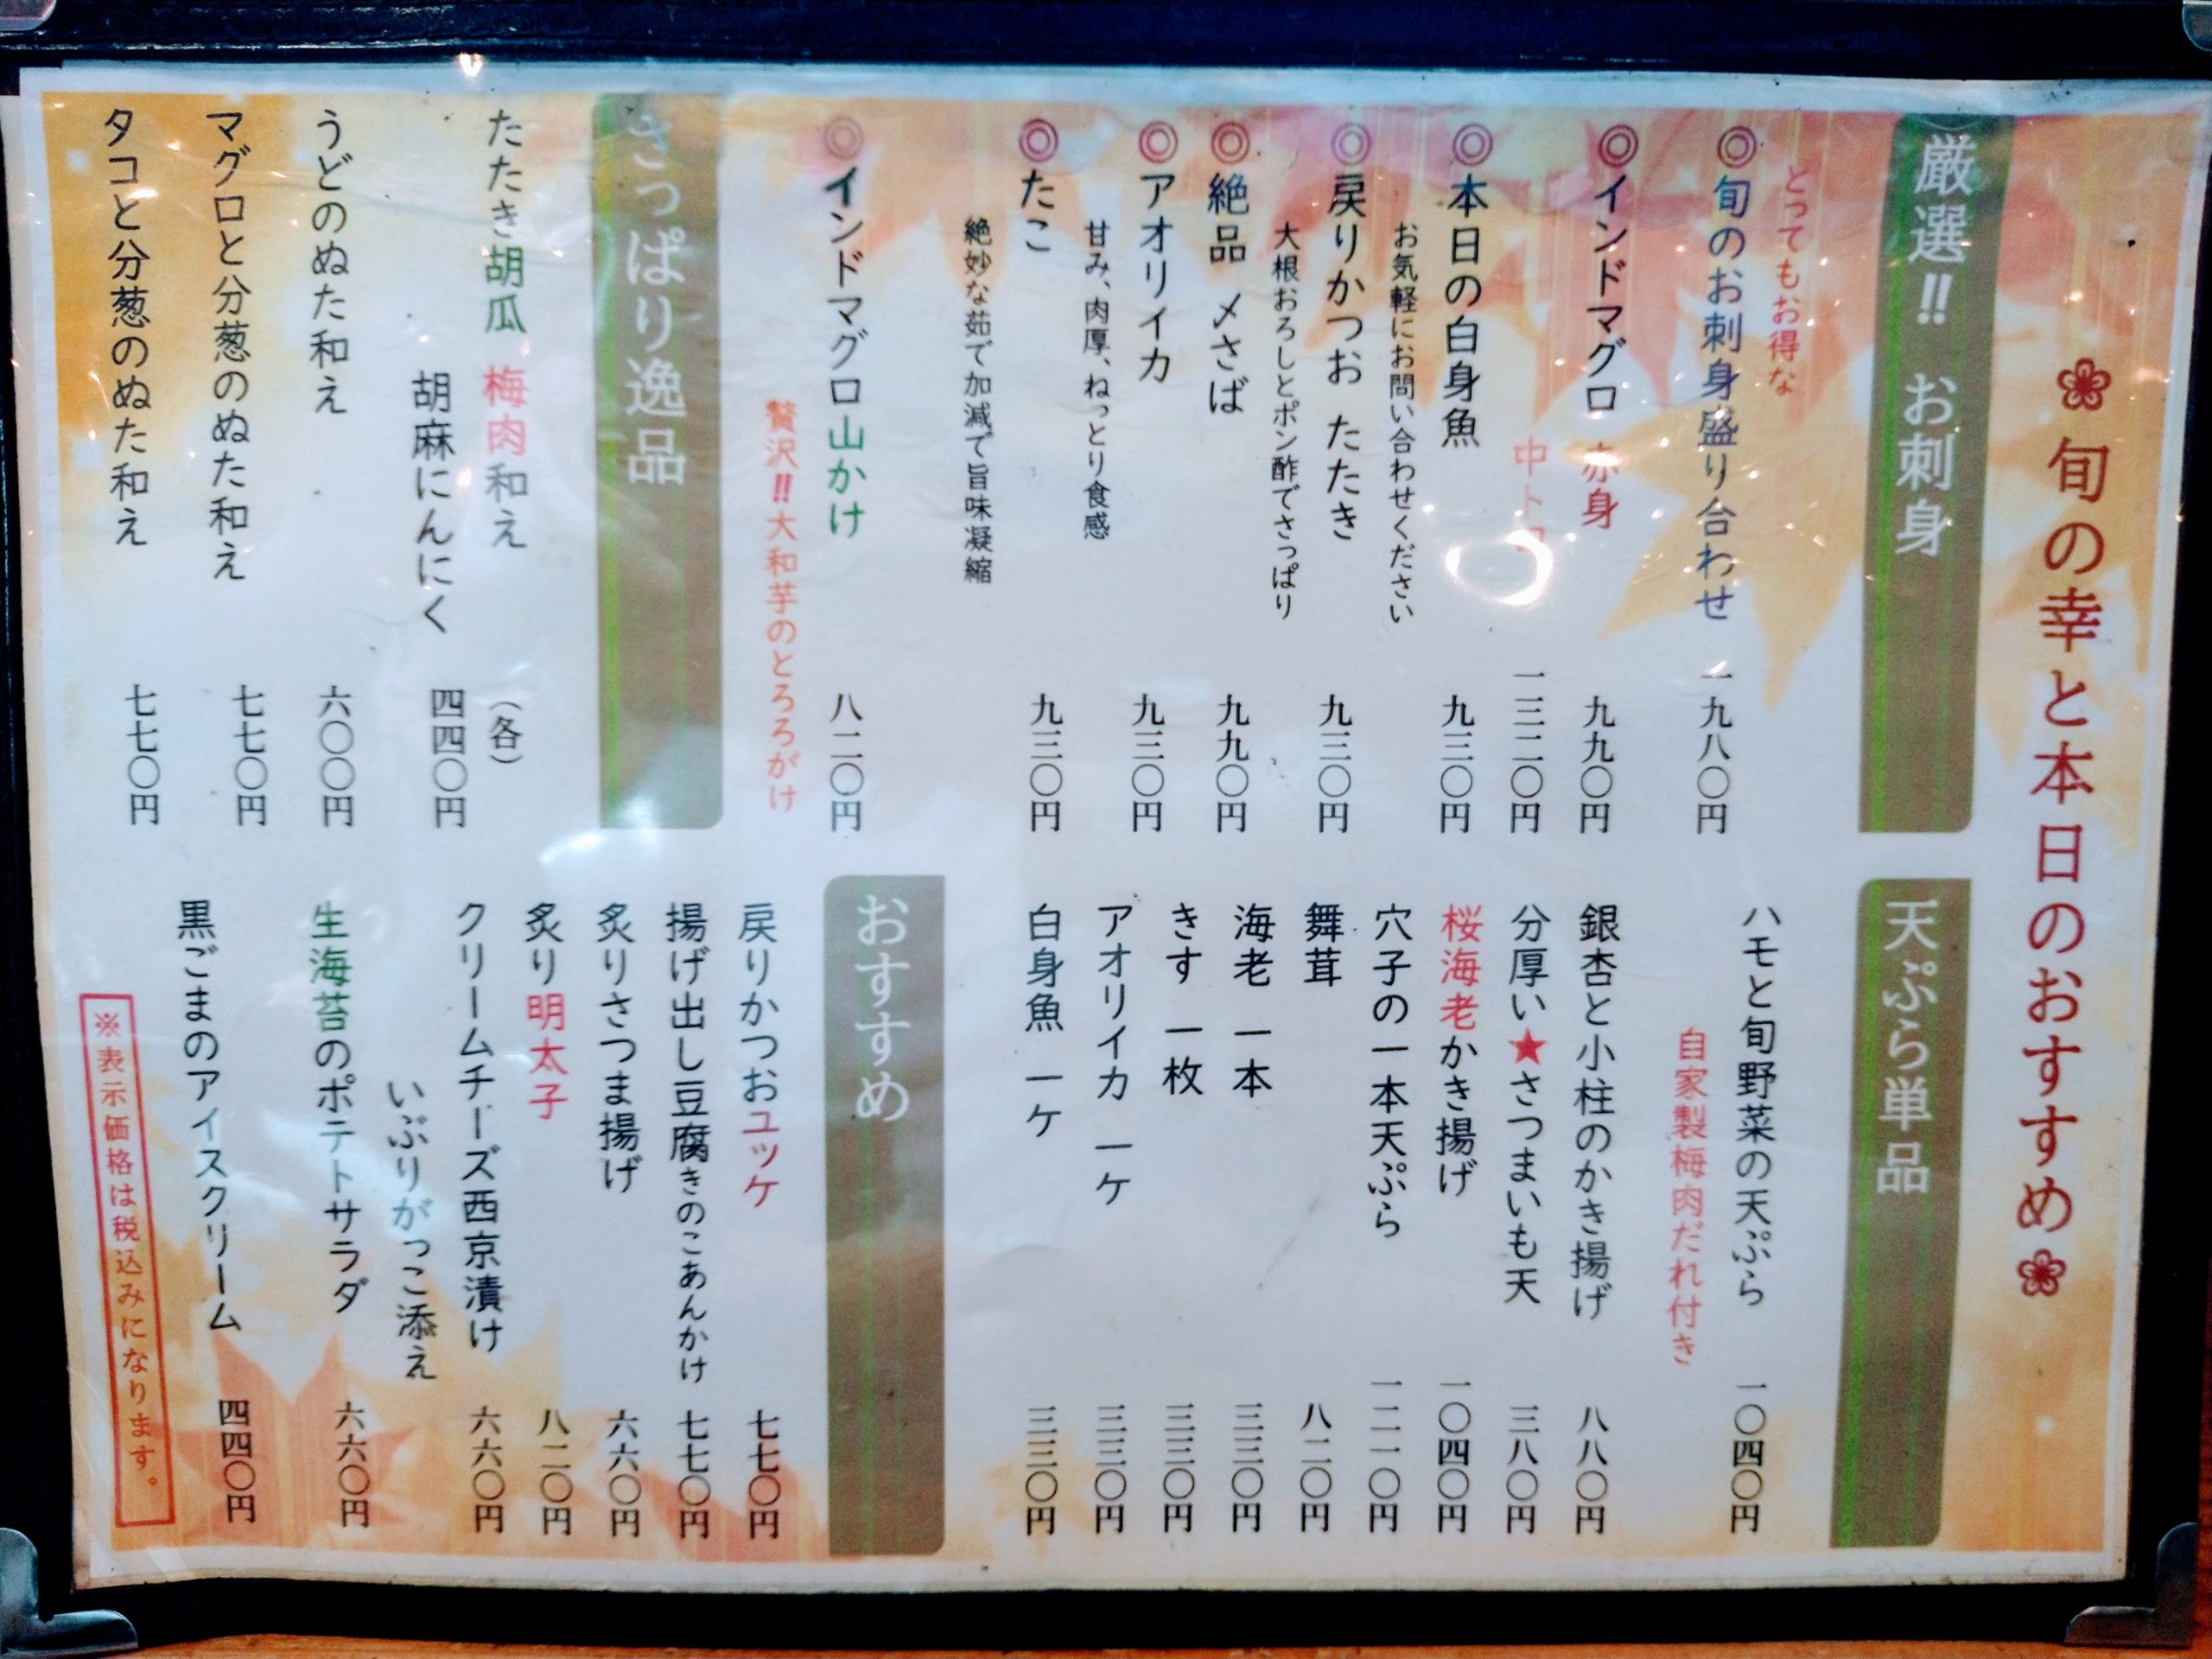 sengawa-soba-ishihara-cuisine-127